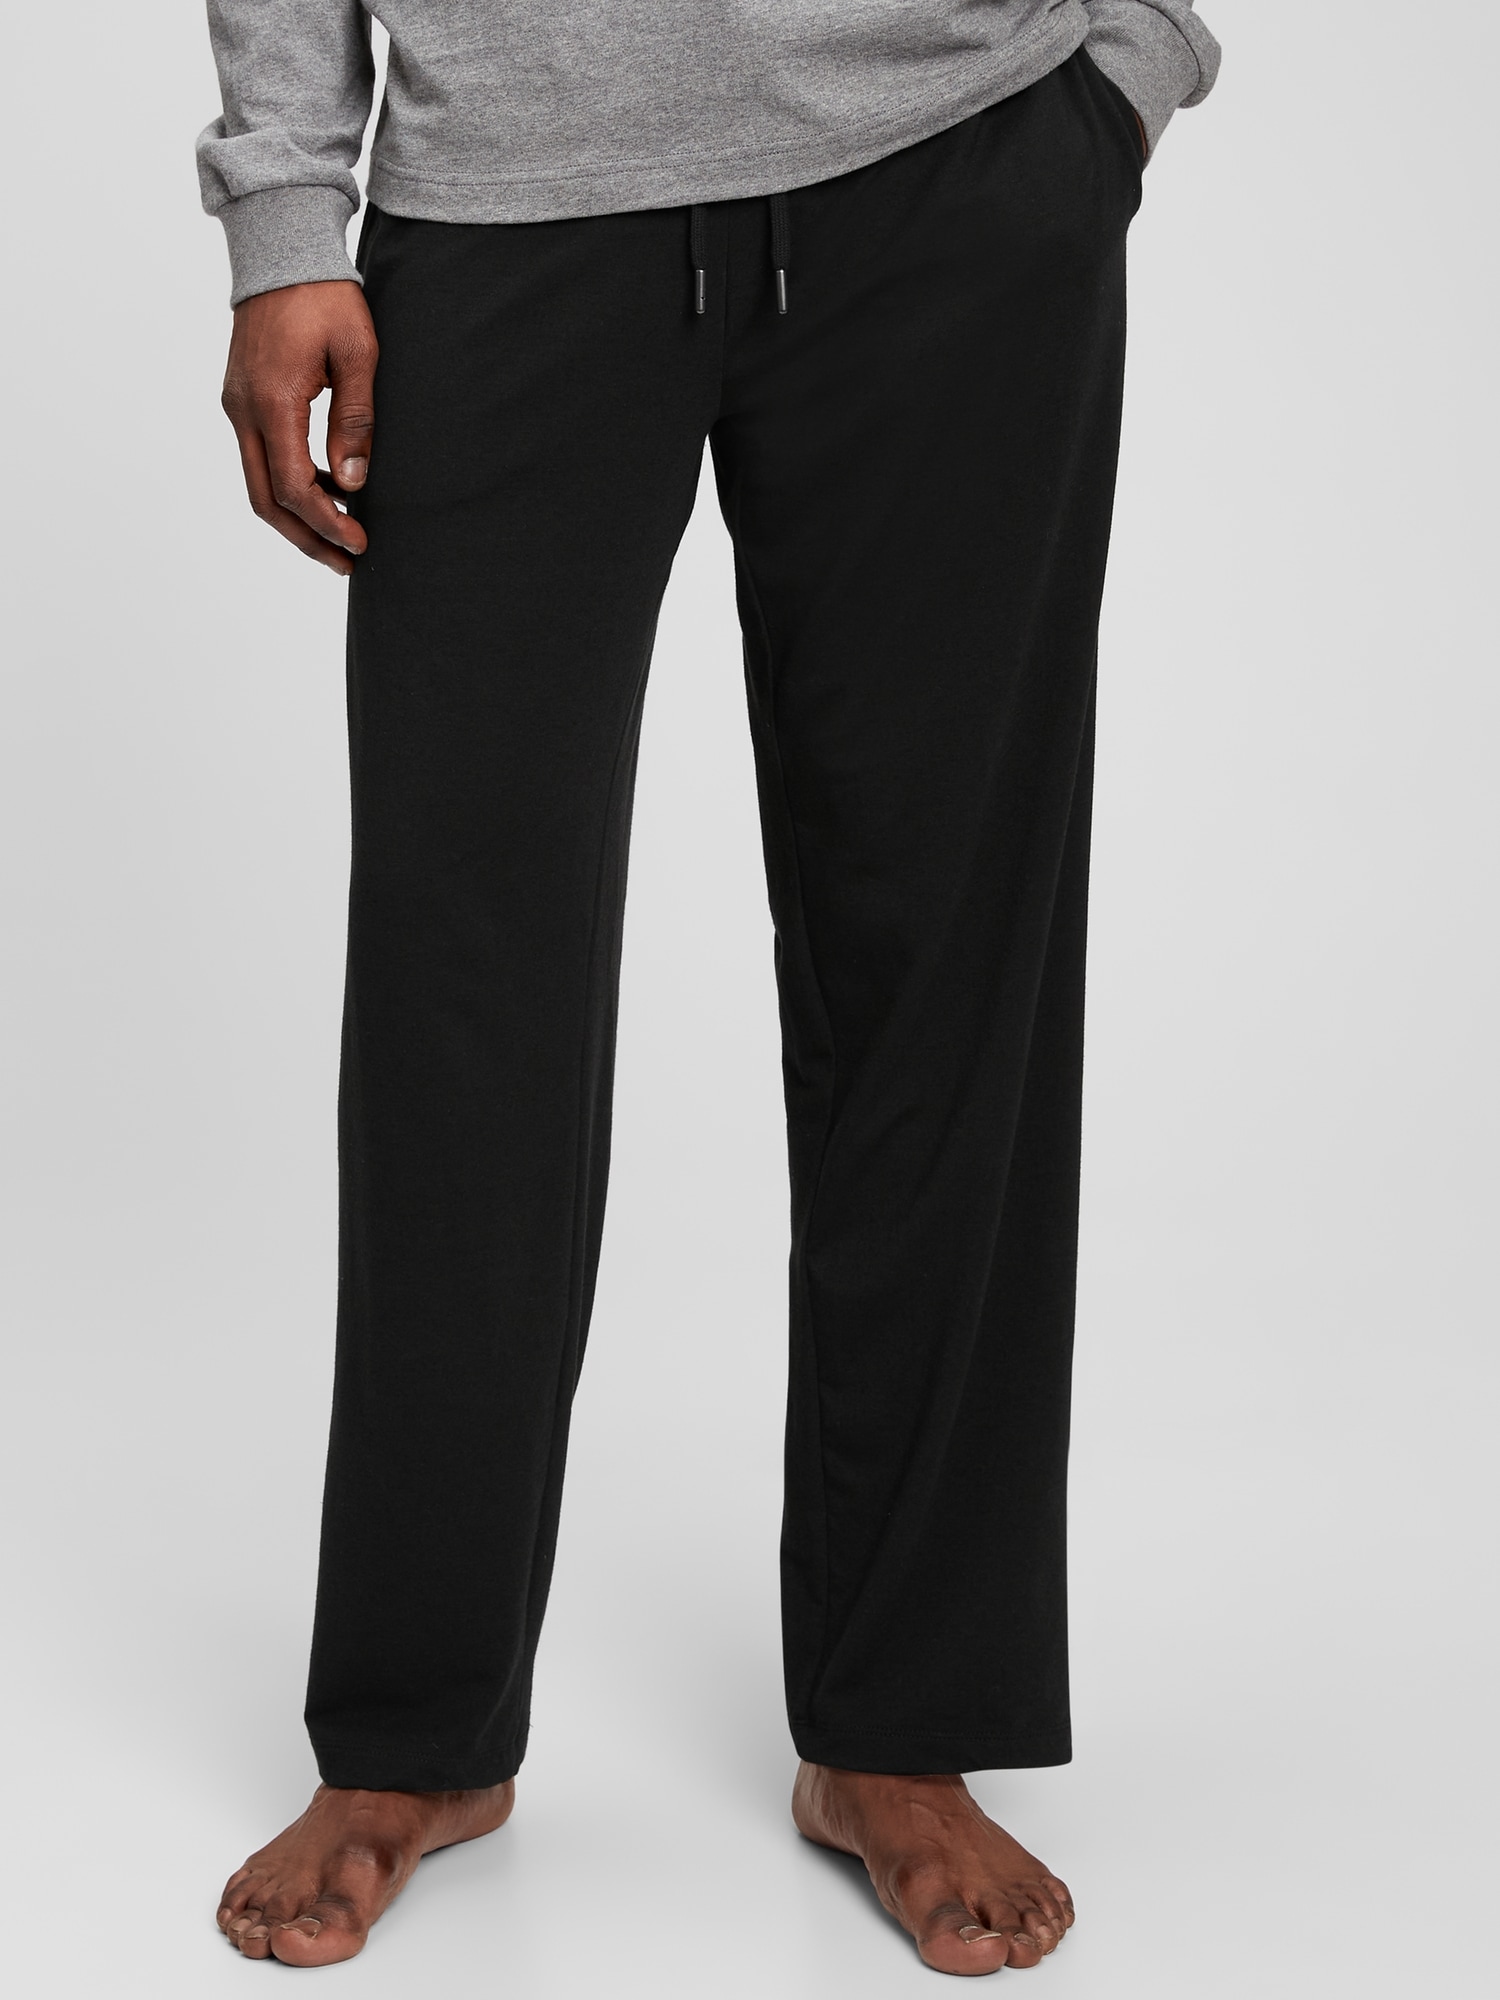 Gap Adult PJ Pants black. 1